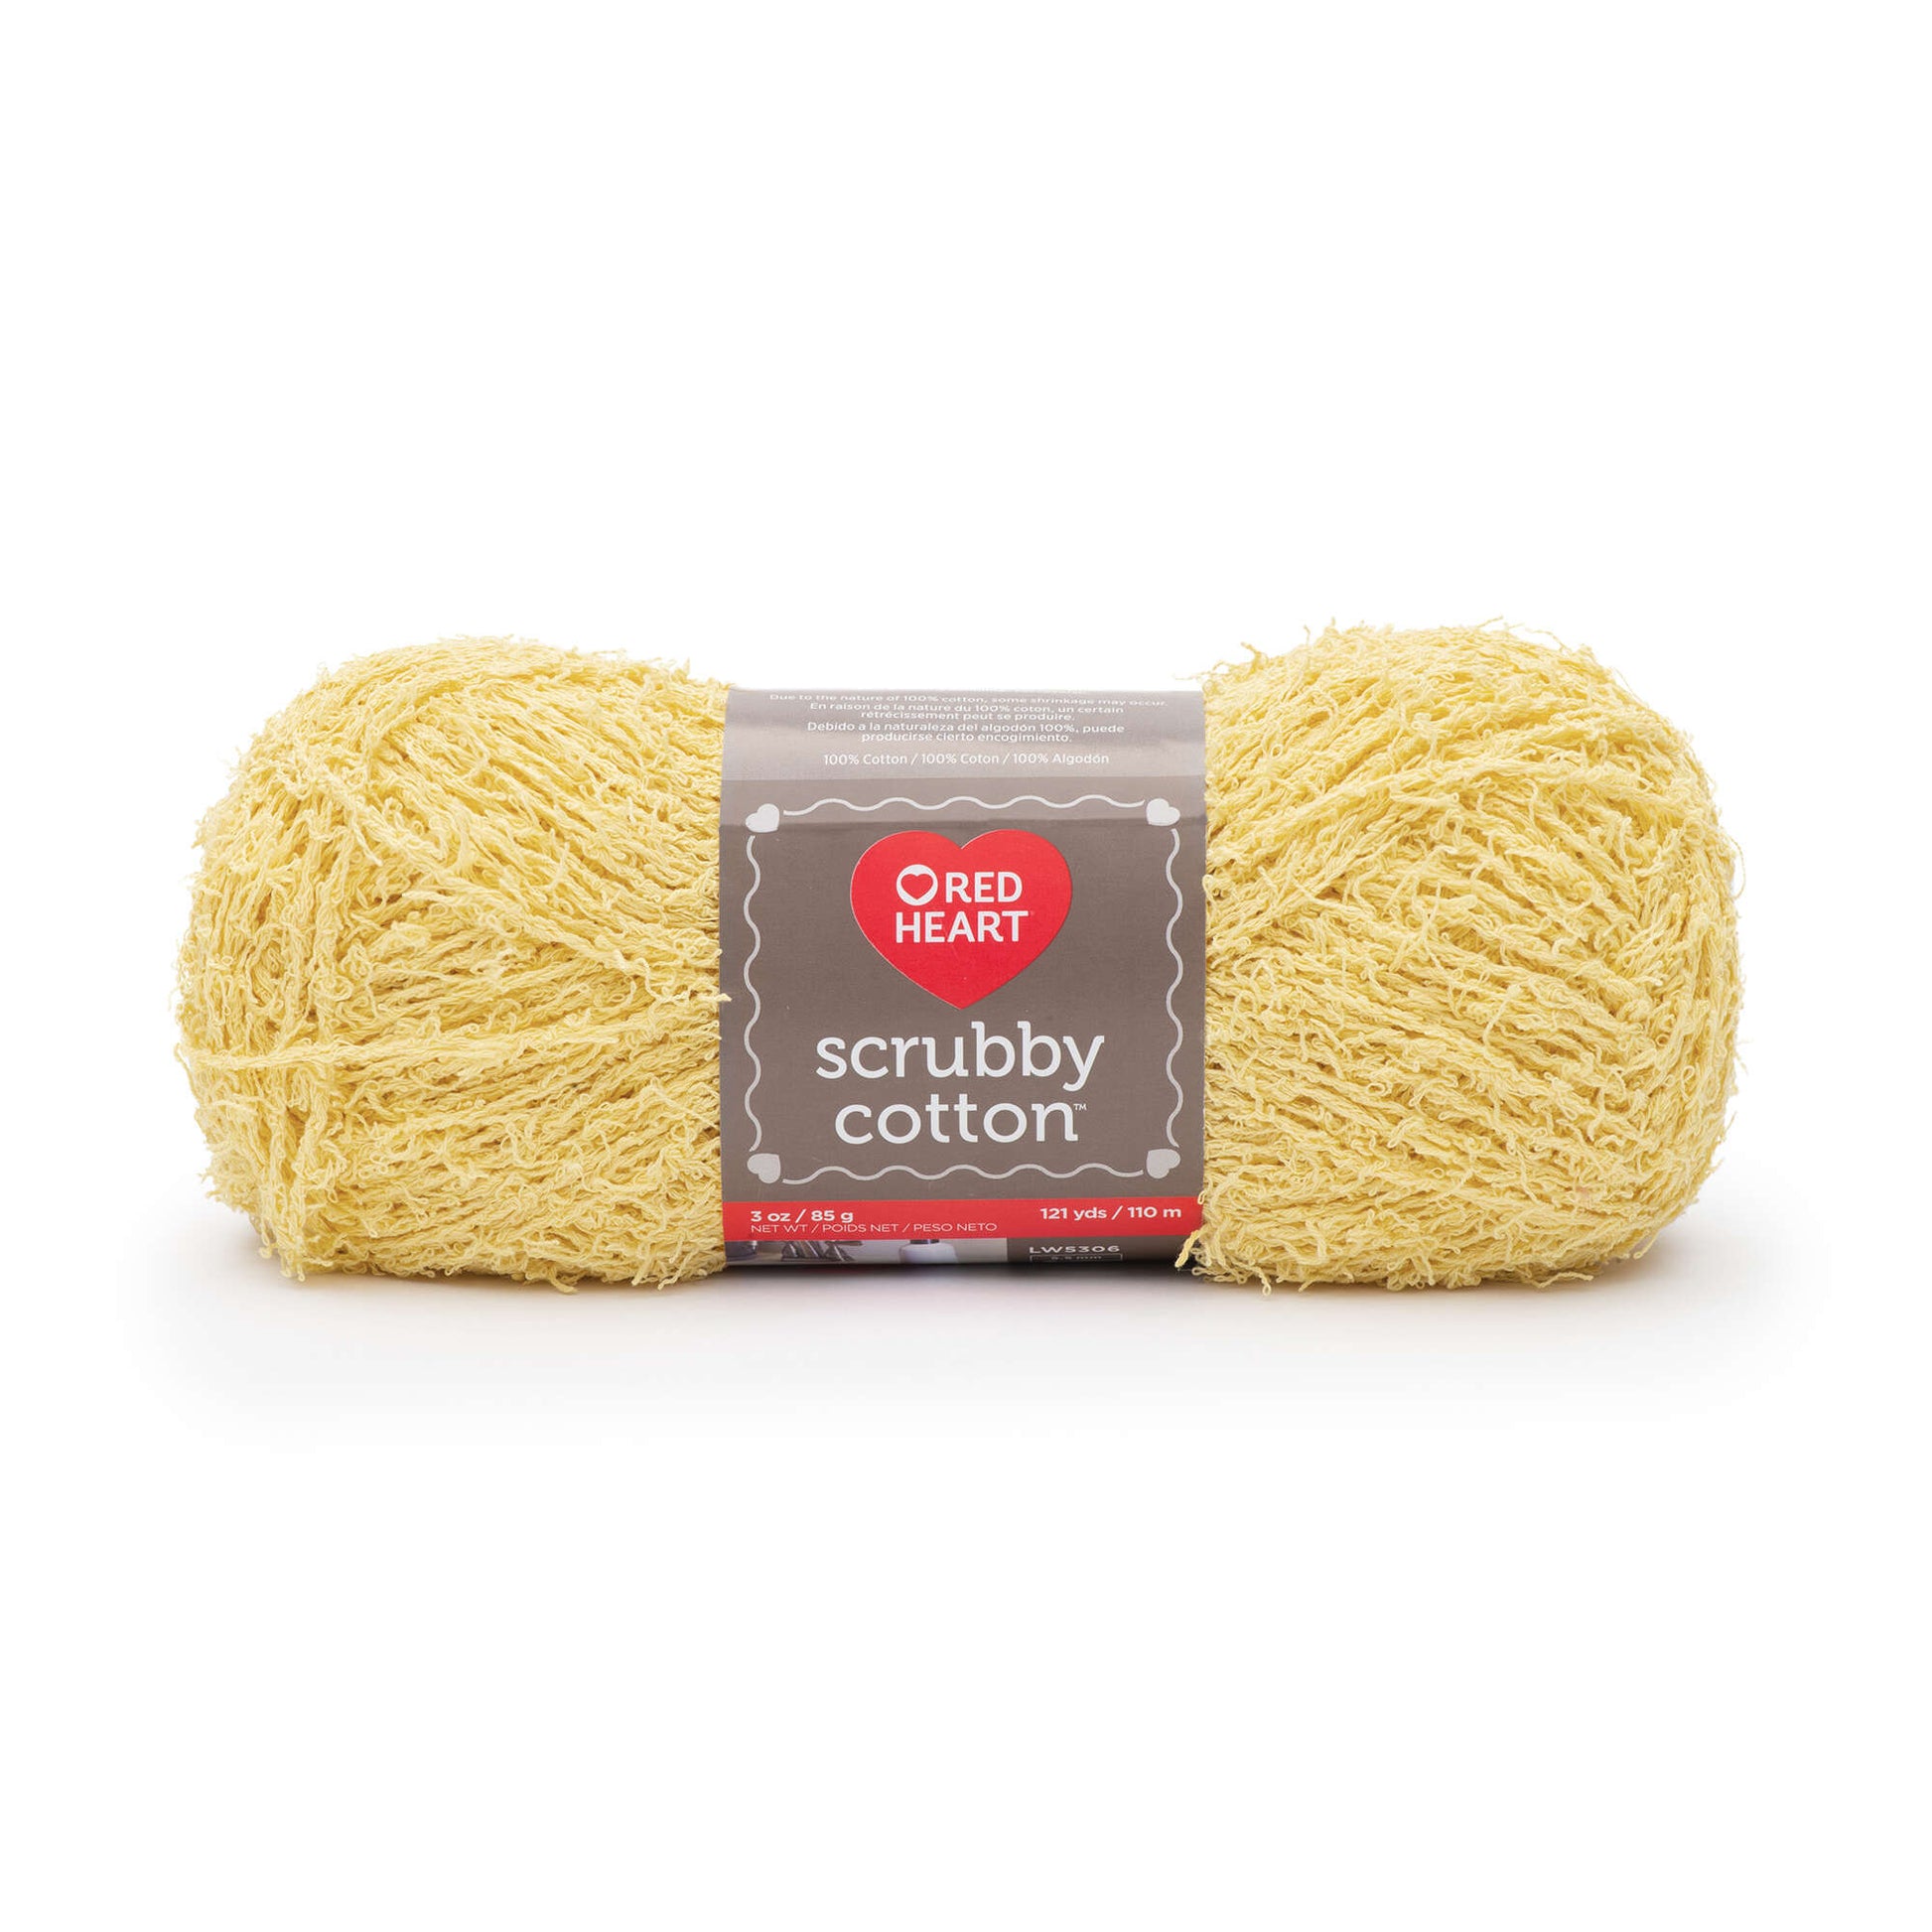 Red Heart Scrubby Cotton Yarn - Clearance shades Lemony